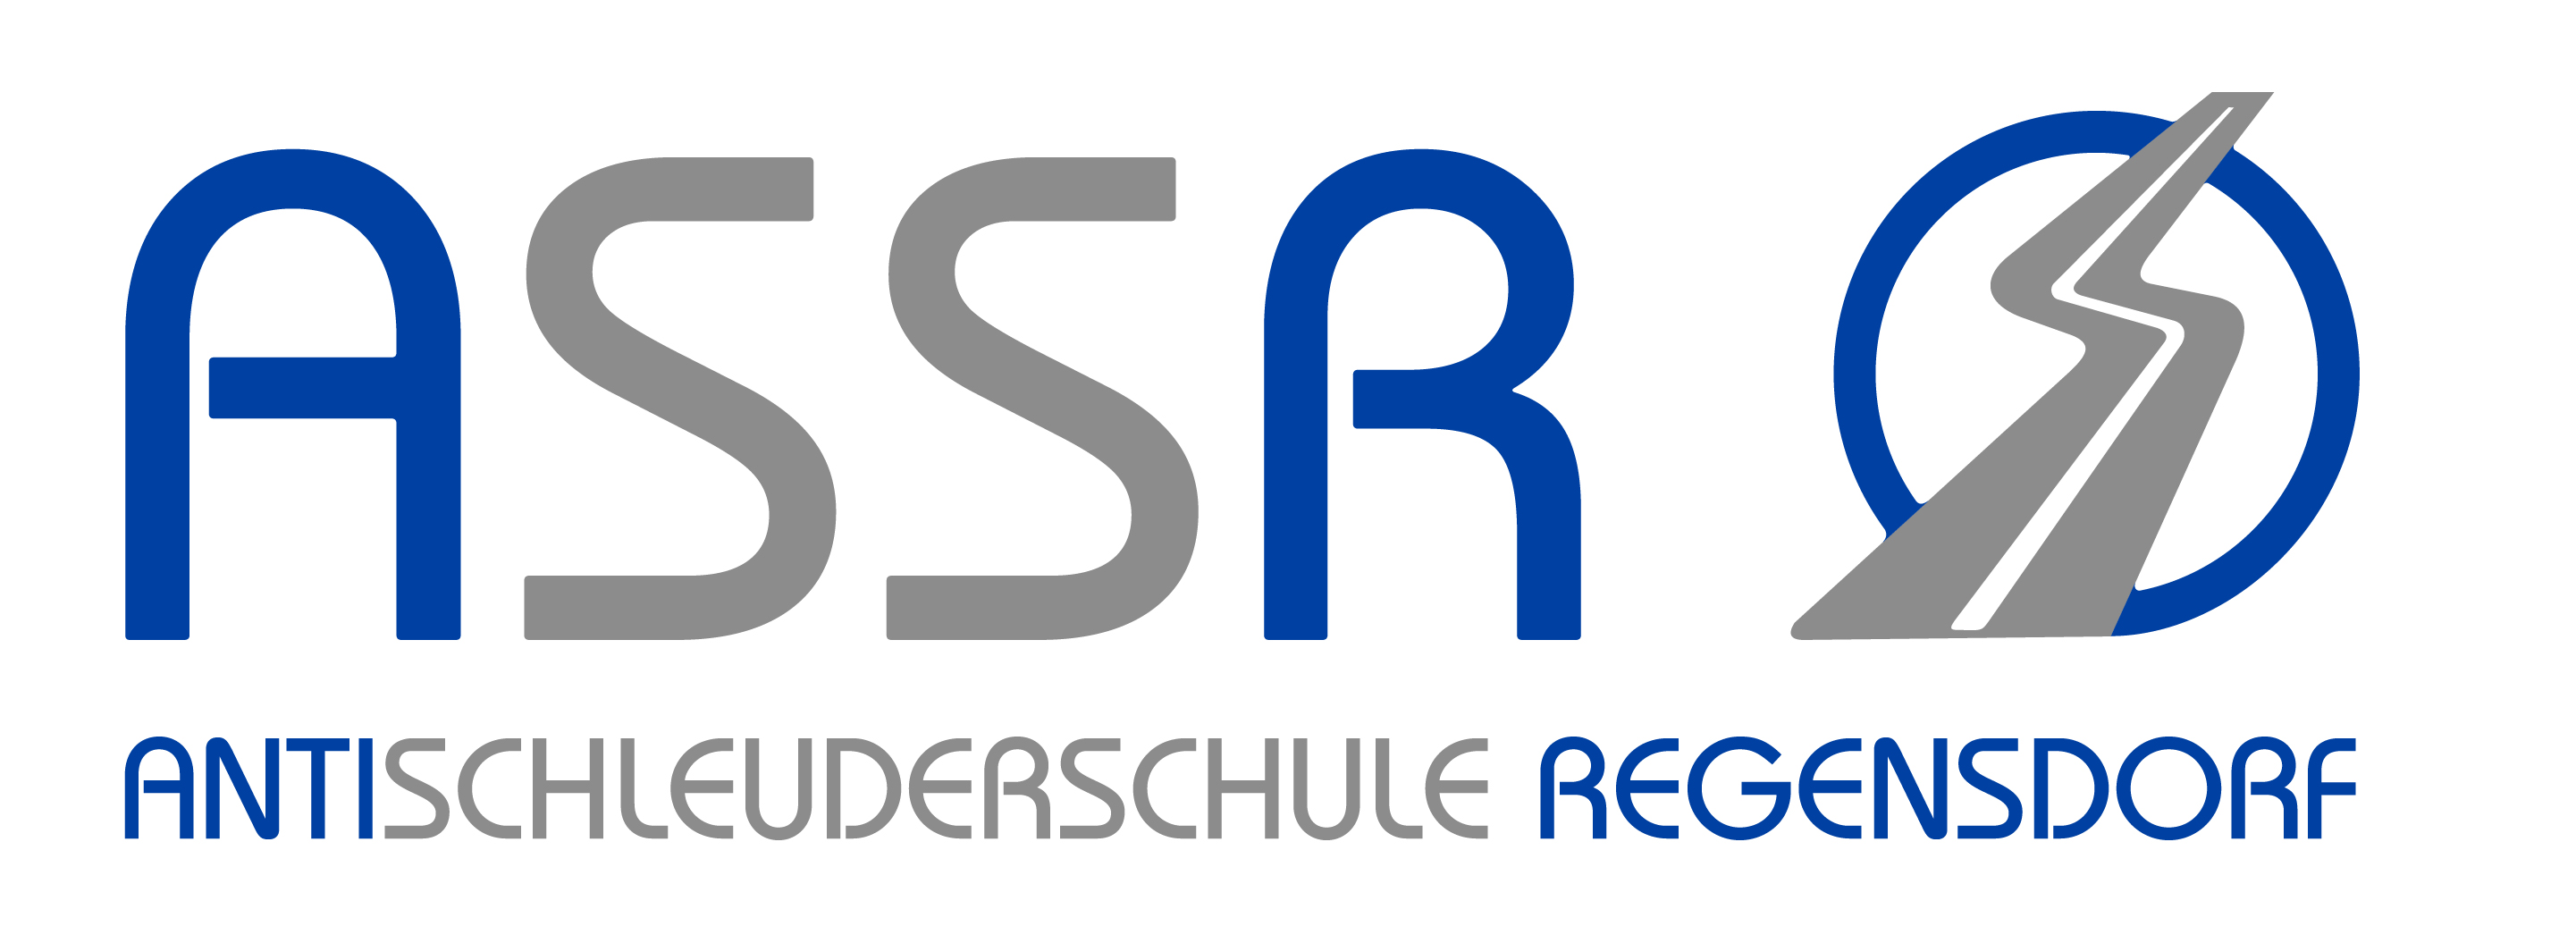 ASSR Antischleuderschule Regensdorf